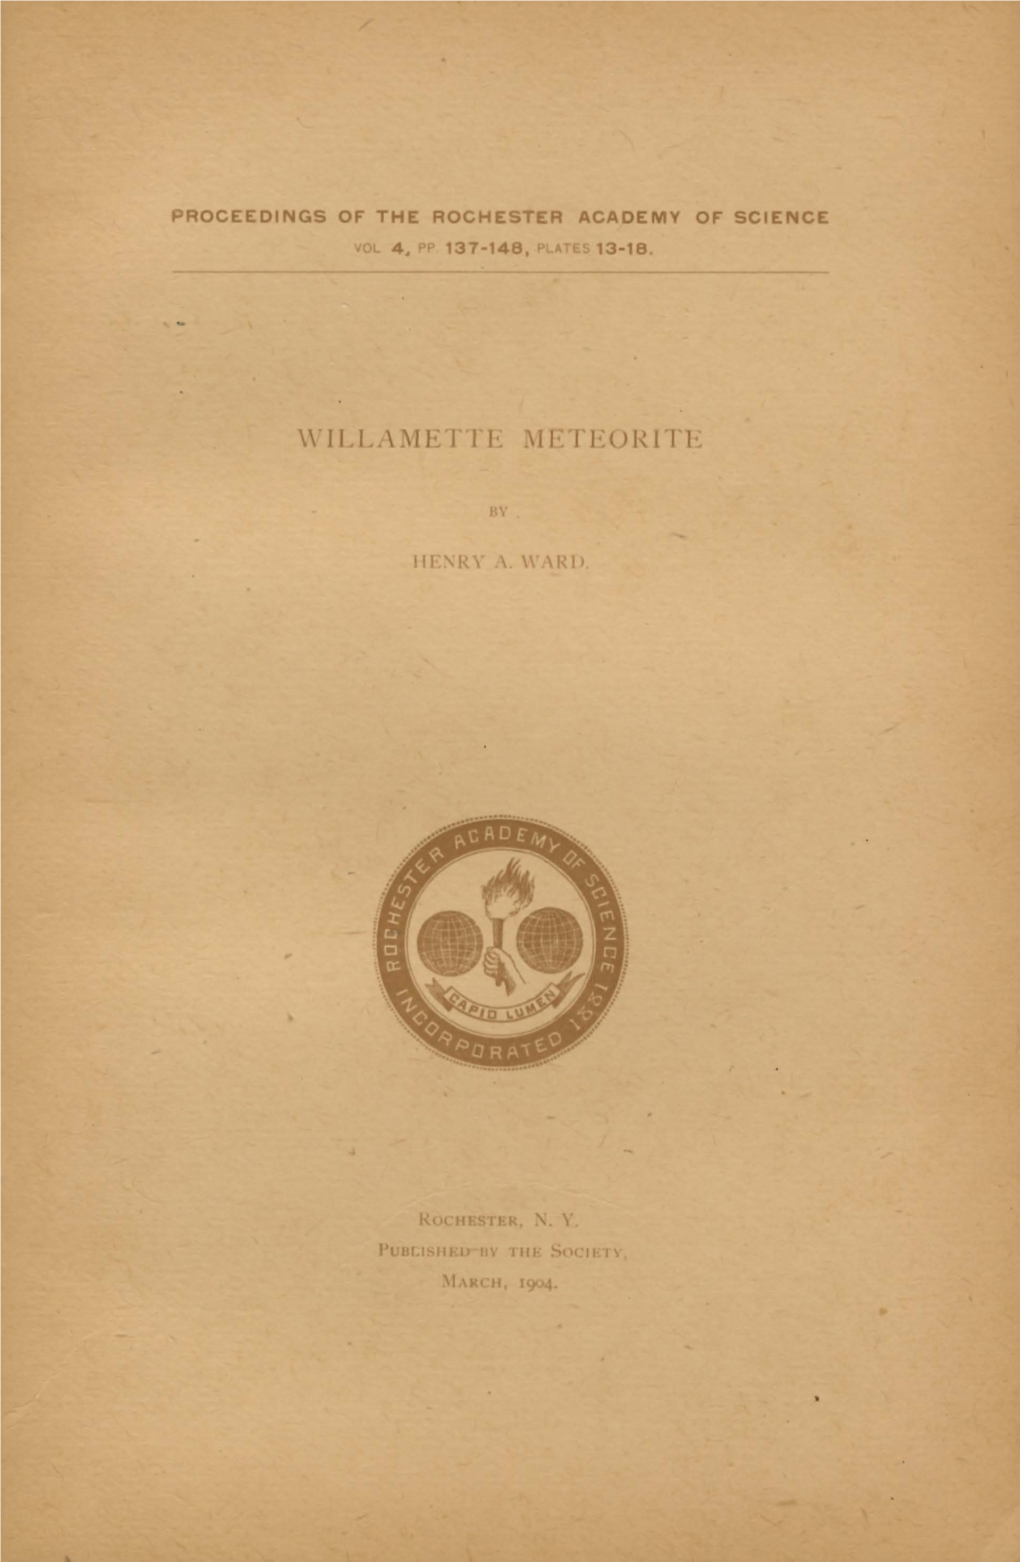 Williamette Meteorite, by H. A. Ward